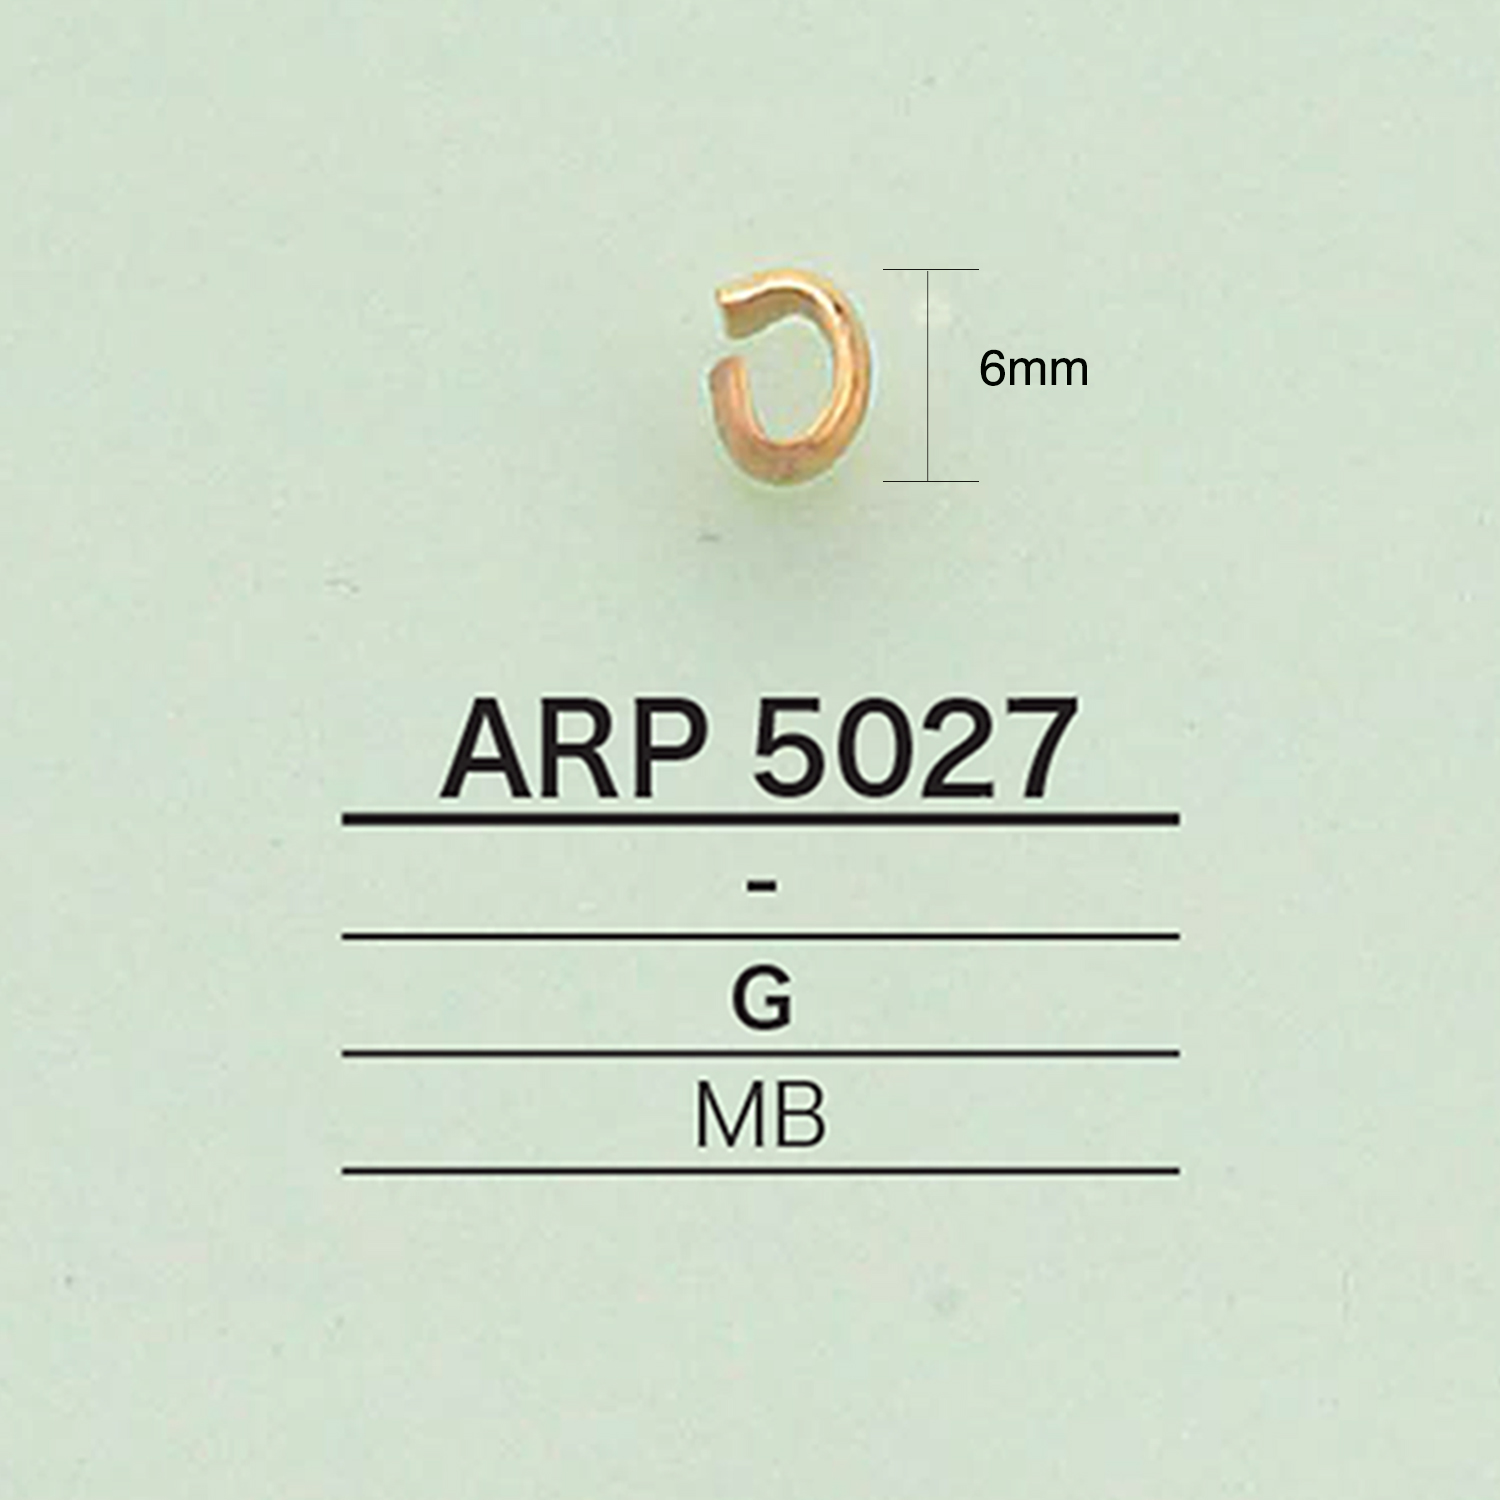 ARP5027 C可以[杂货等] 爱丽丝纽扣